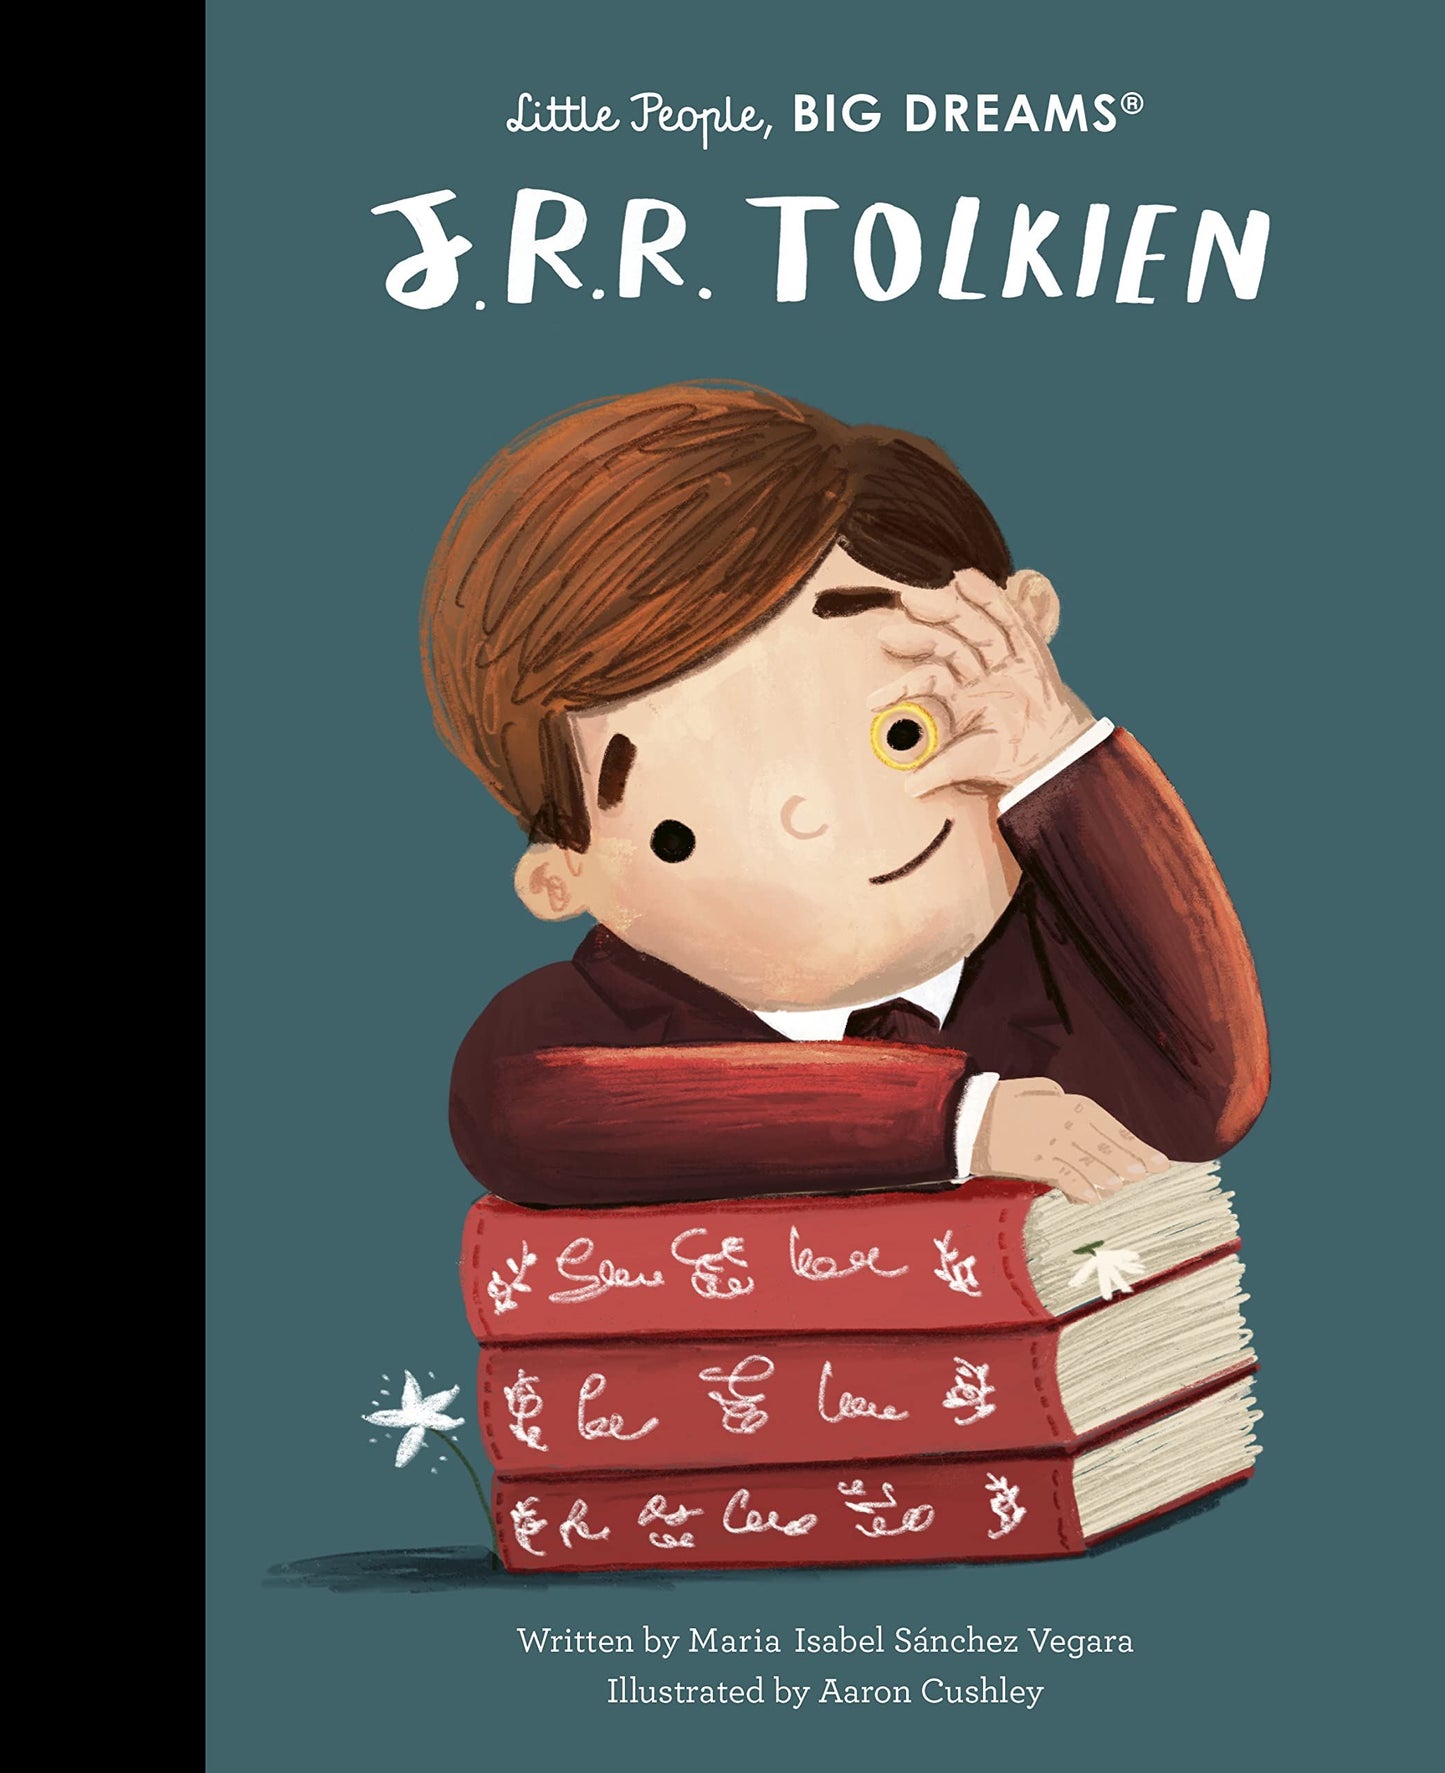 Little People, Big Dreams: J.R.R. Tolkien